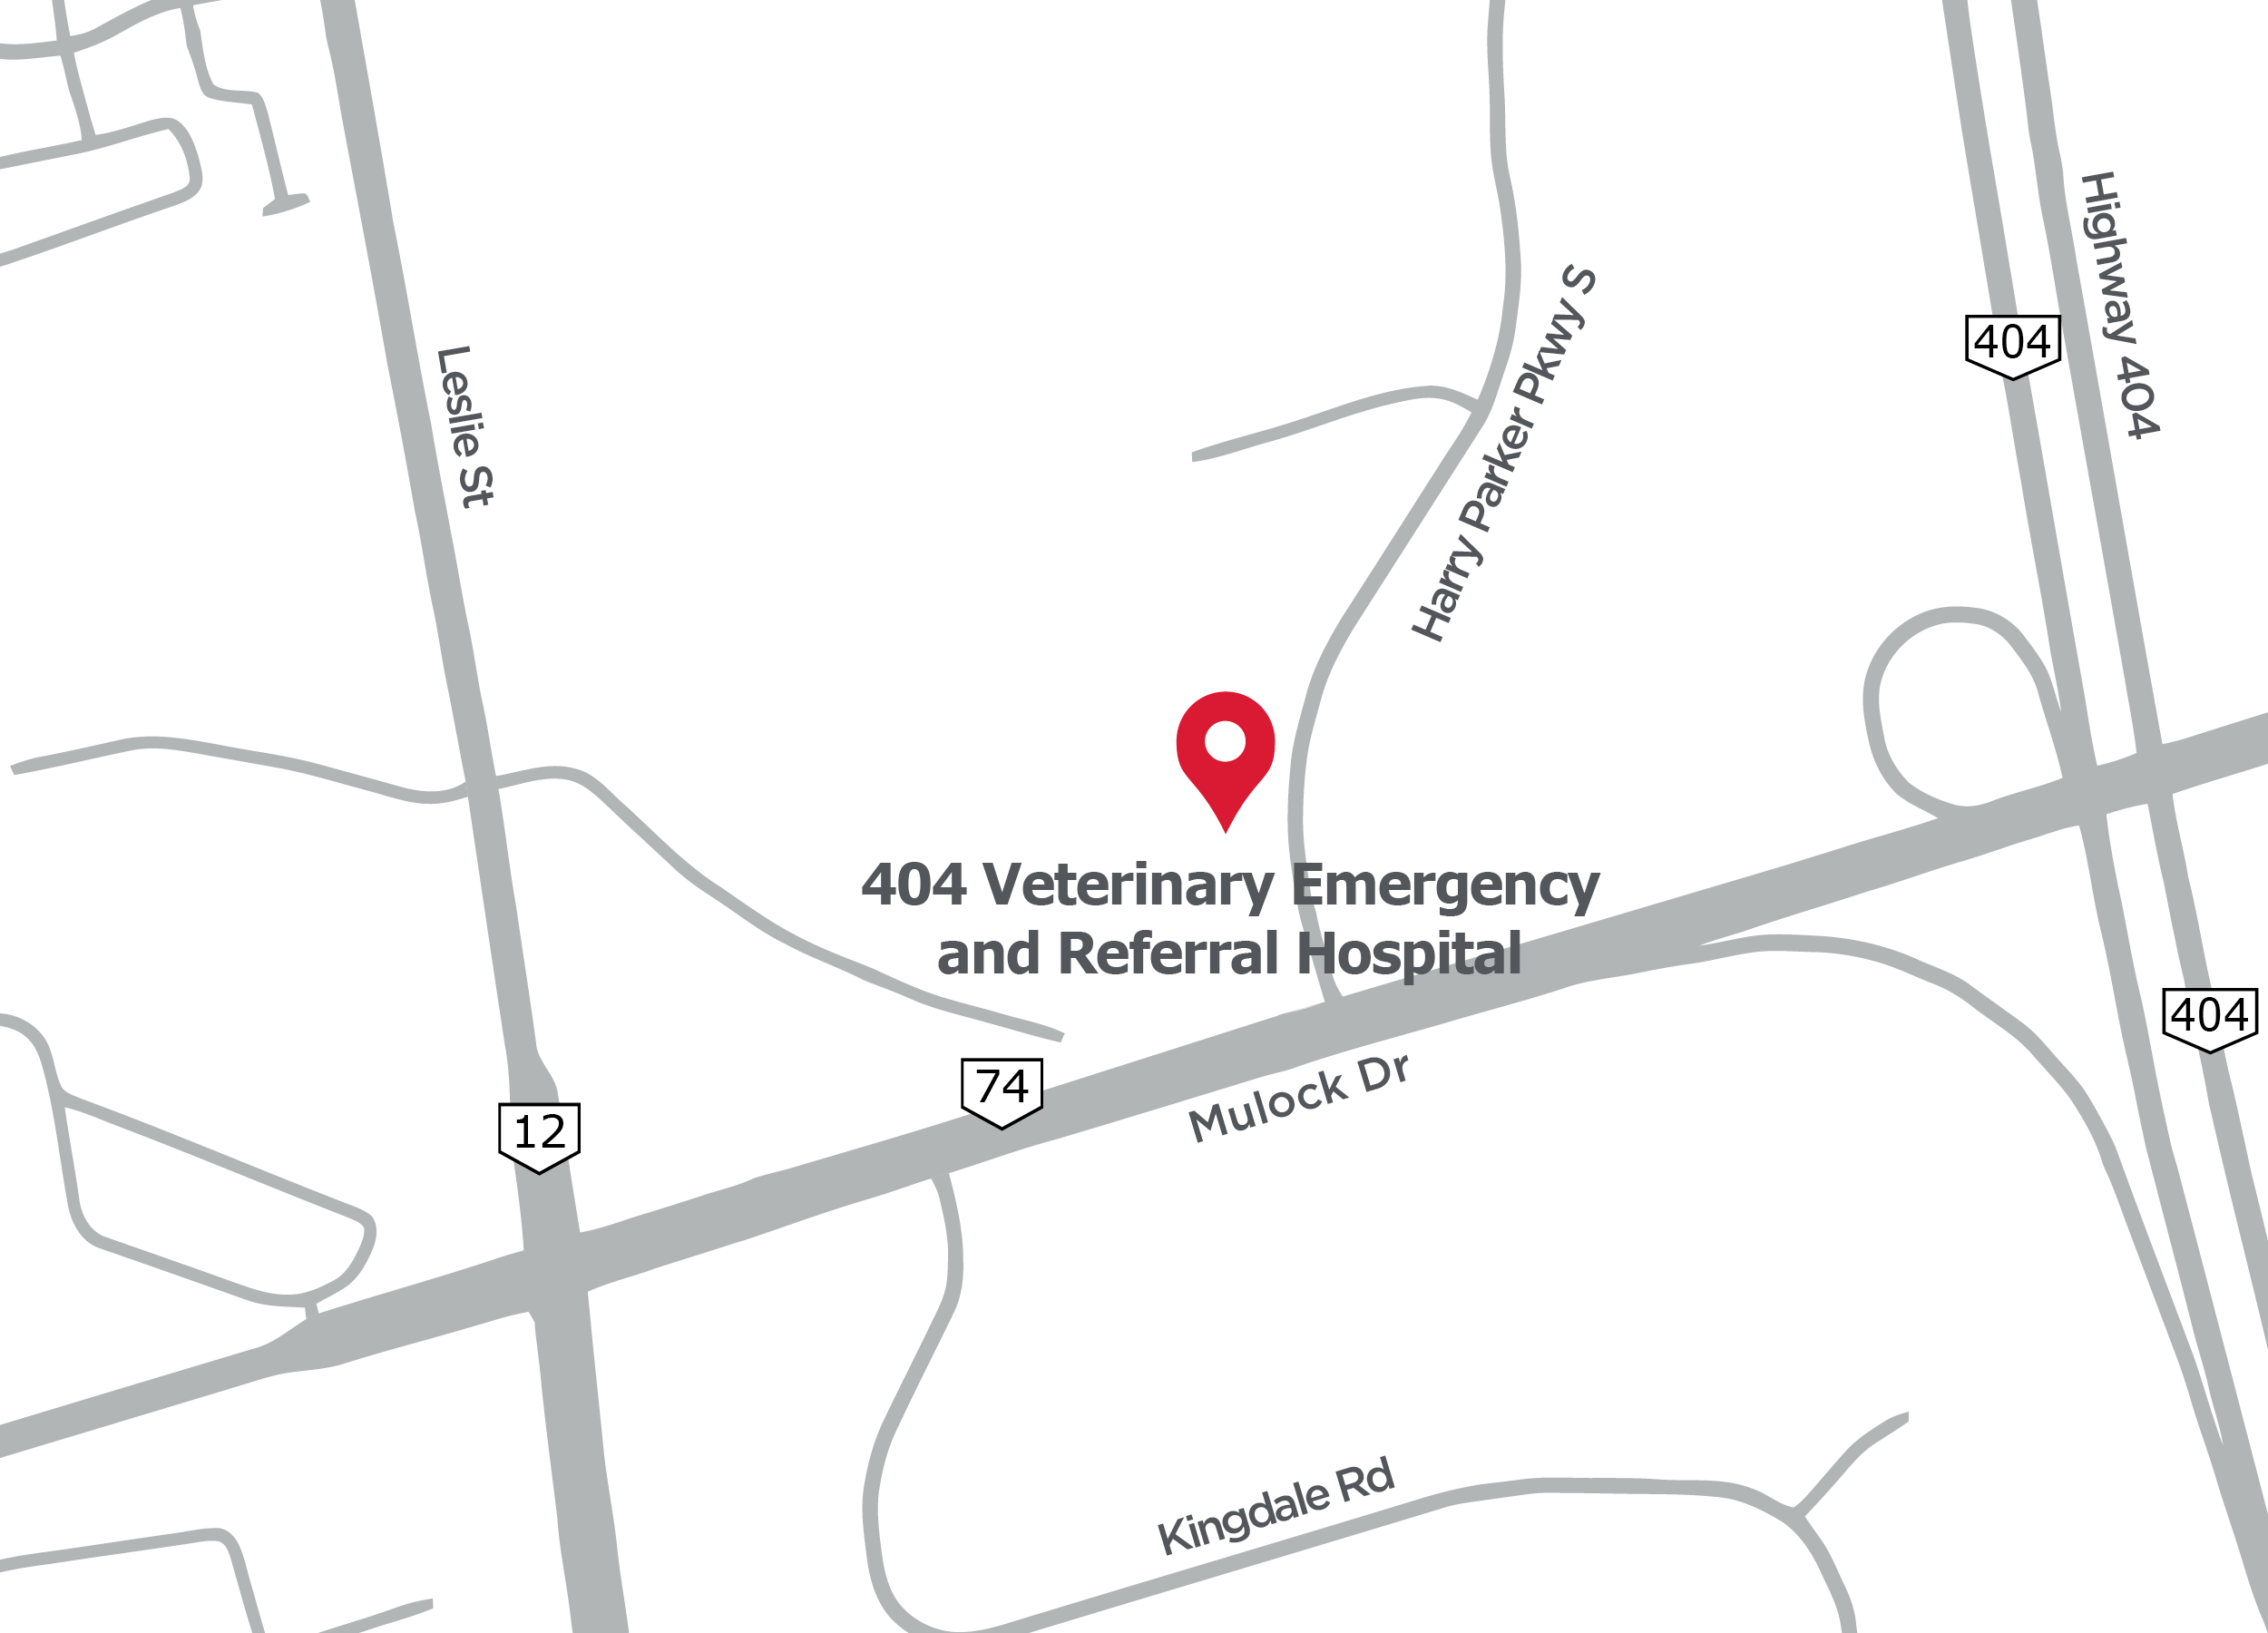 404 Veterinary Emergency and Referral Hospital